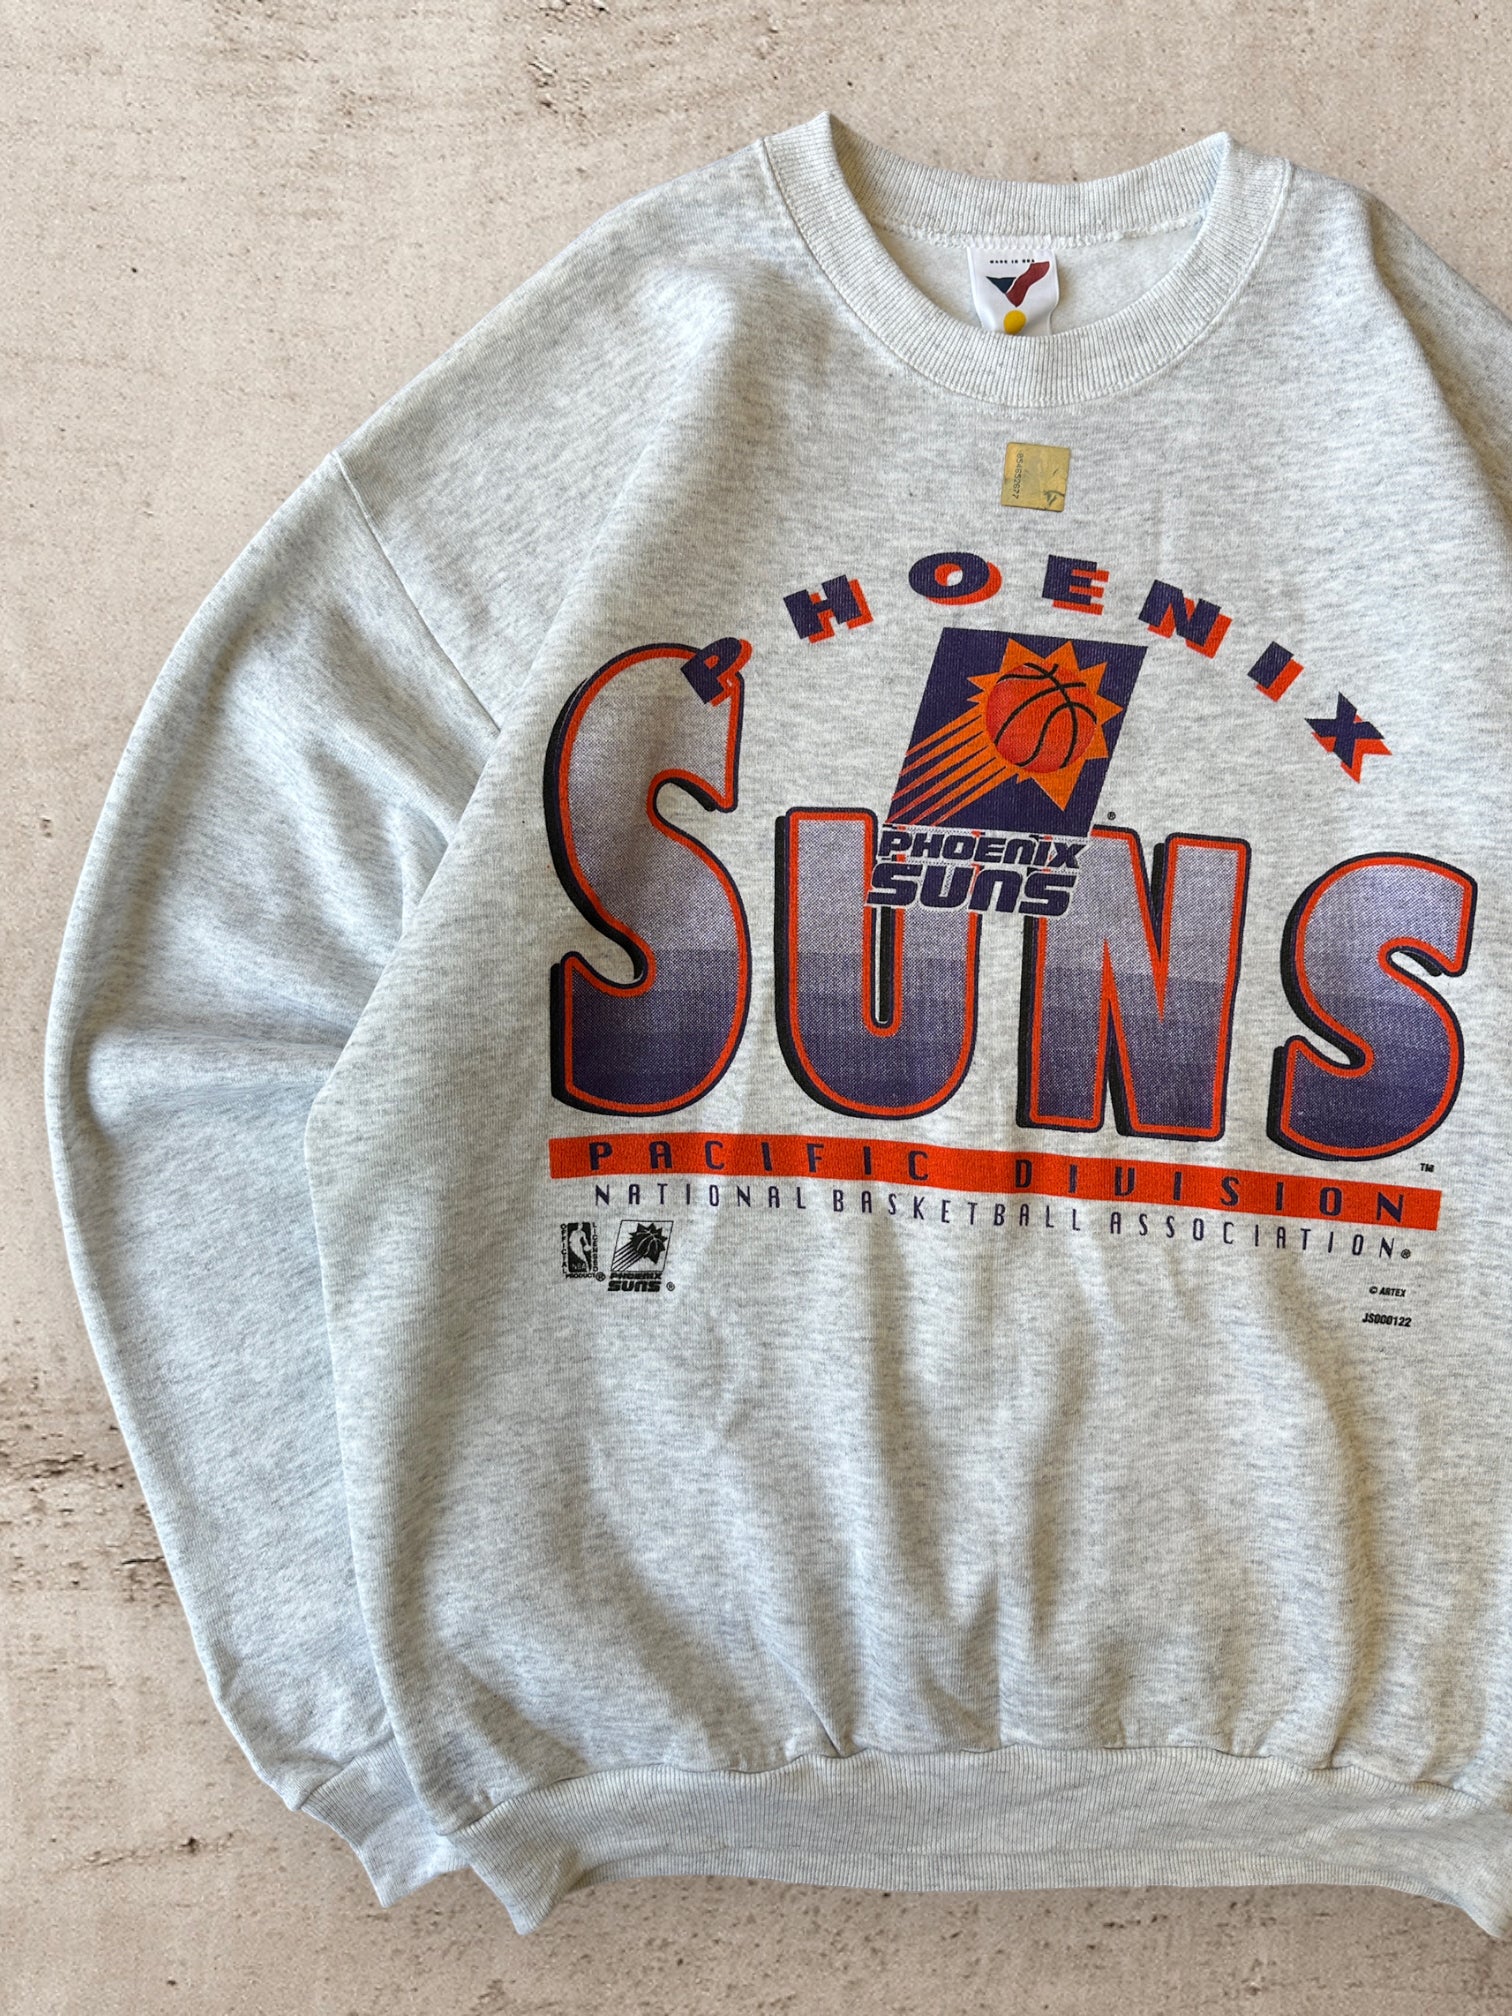 90s Phoenix Suns Graphic Crewneck - Medium & Large